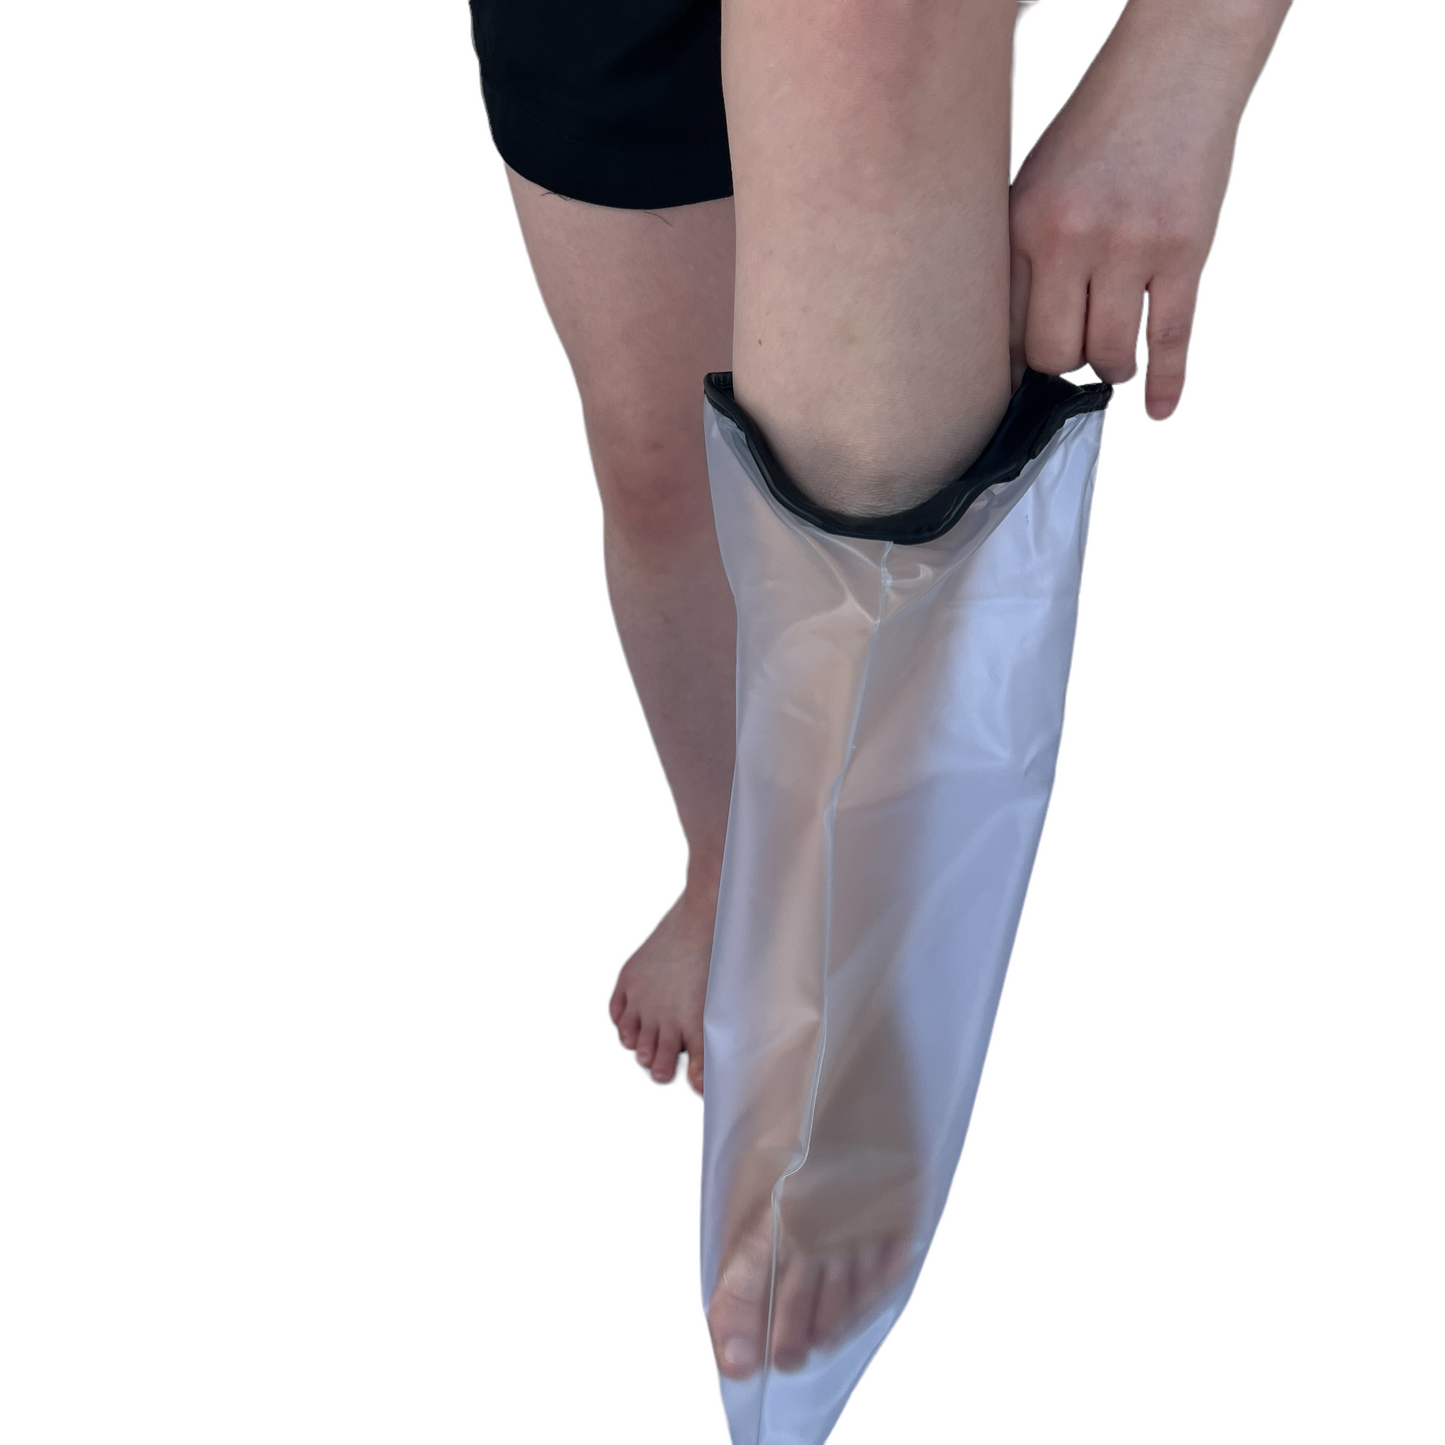 Waterproof Leg Cast Cover